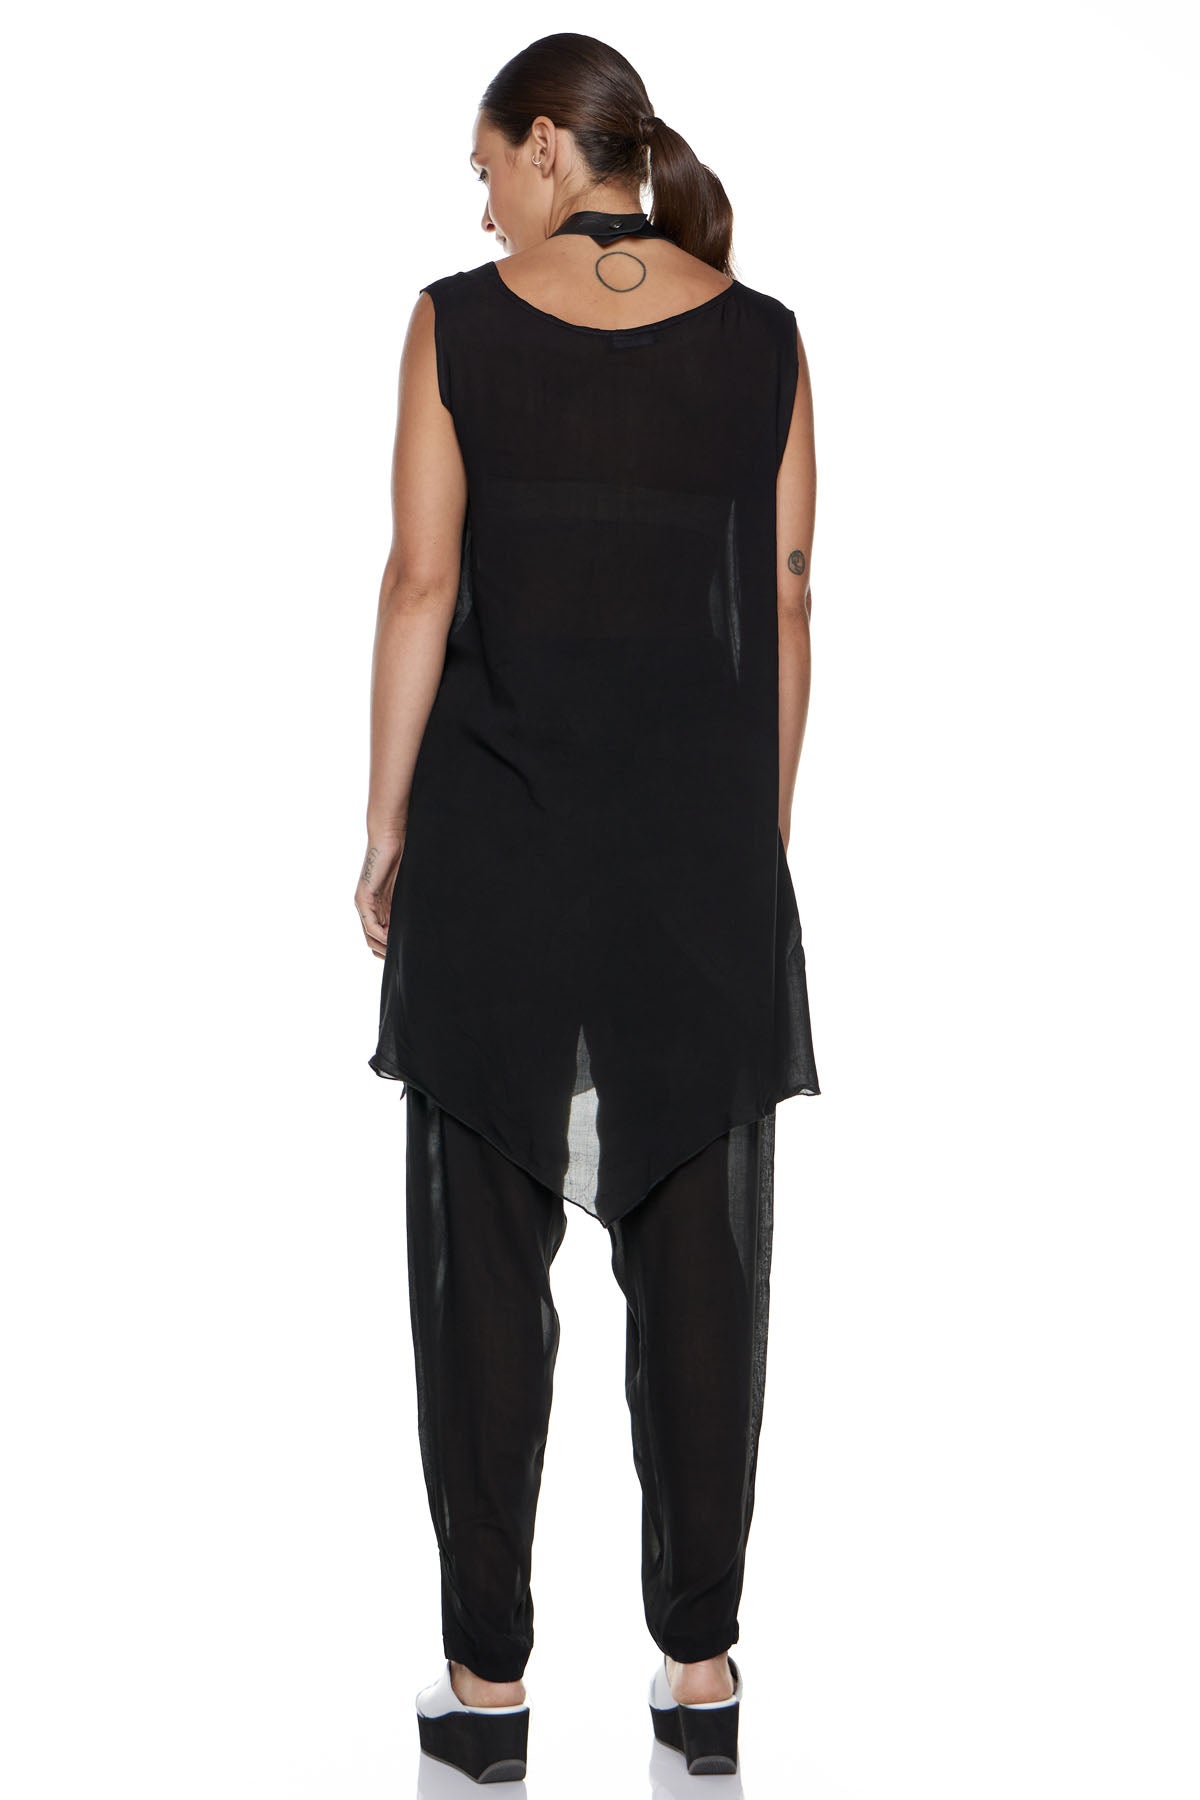 Chic & Simple Combination of Mirella T-shirt & Myrto Pants - Black